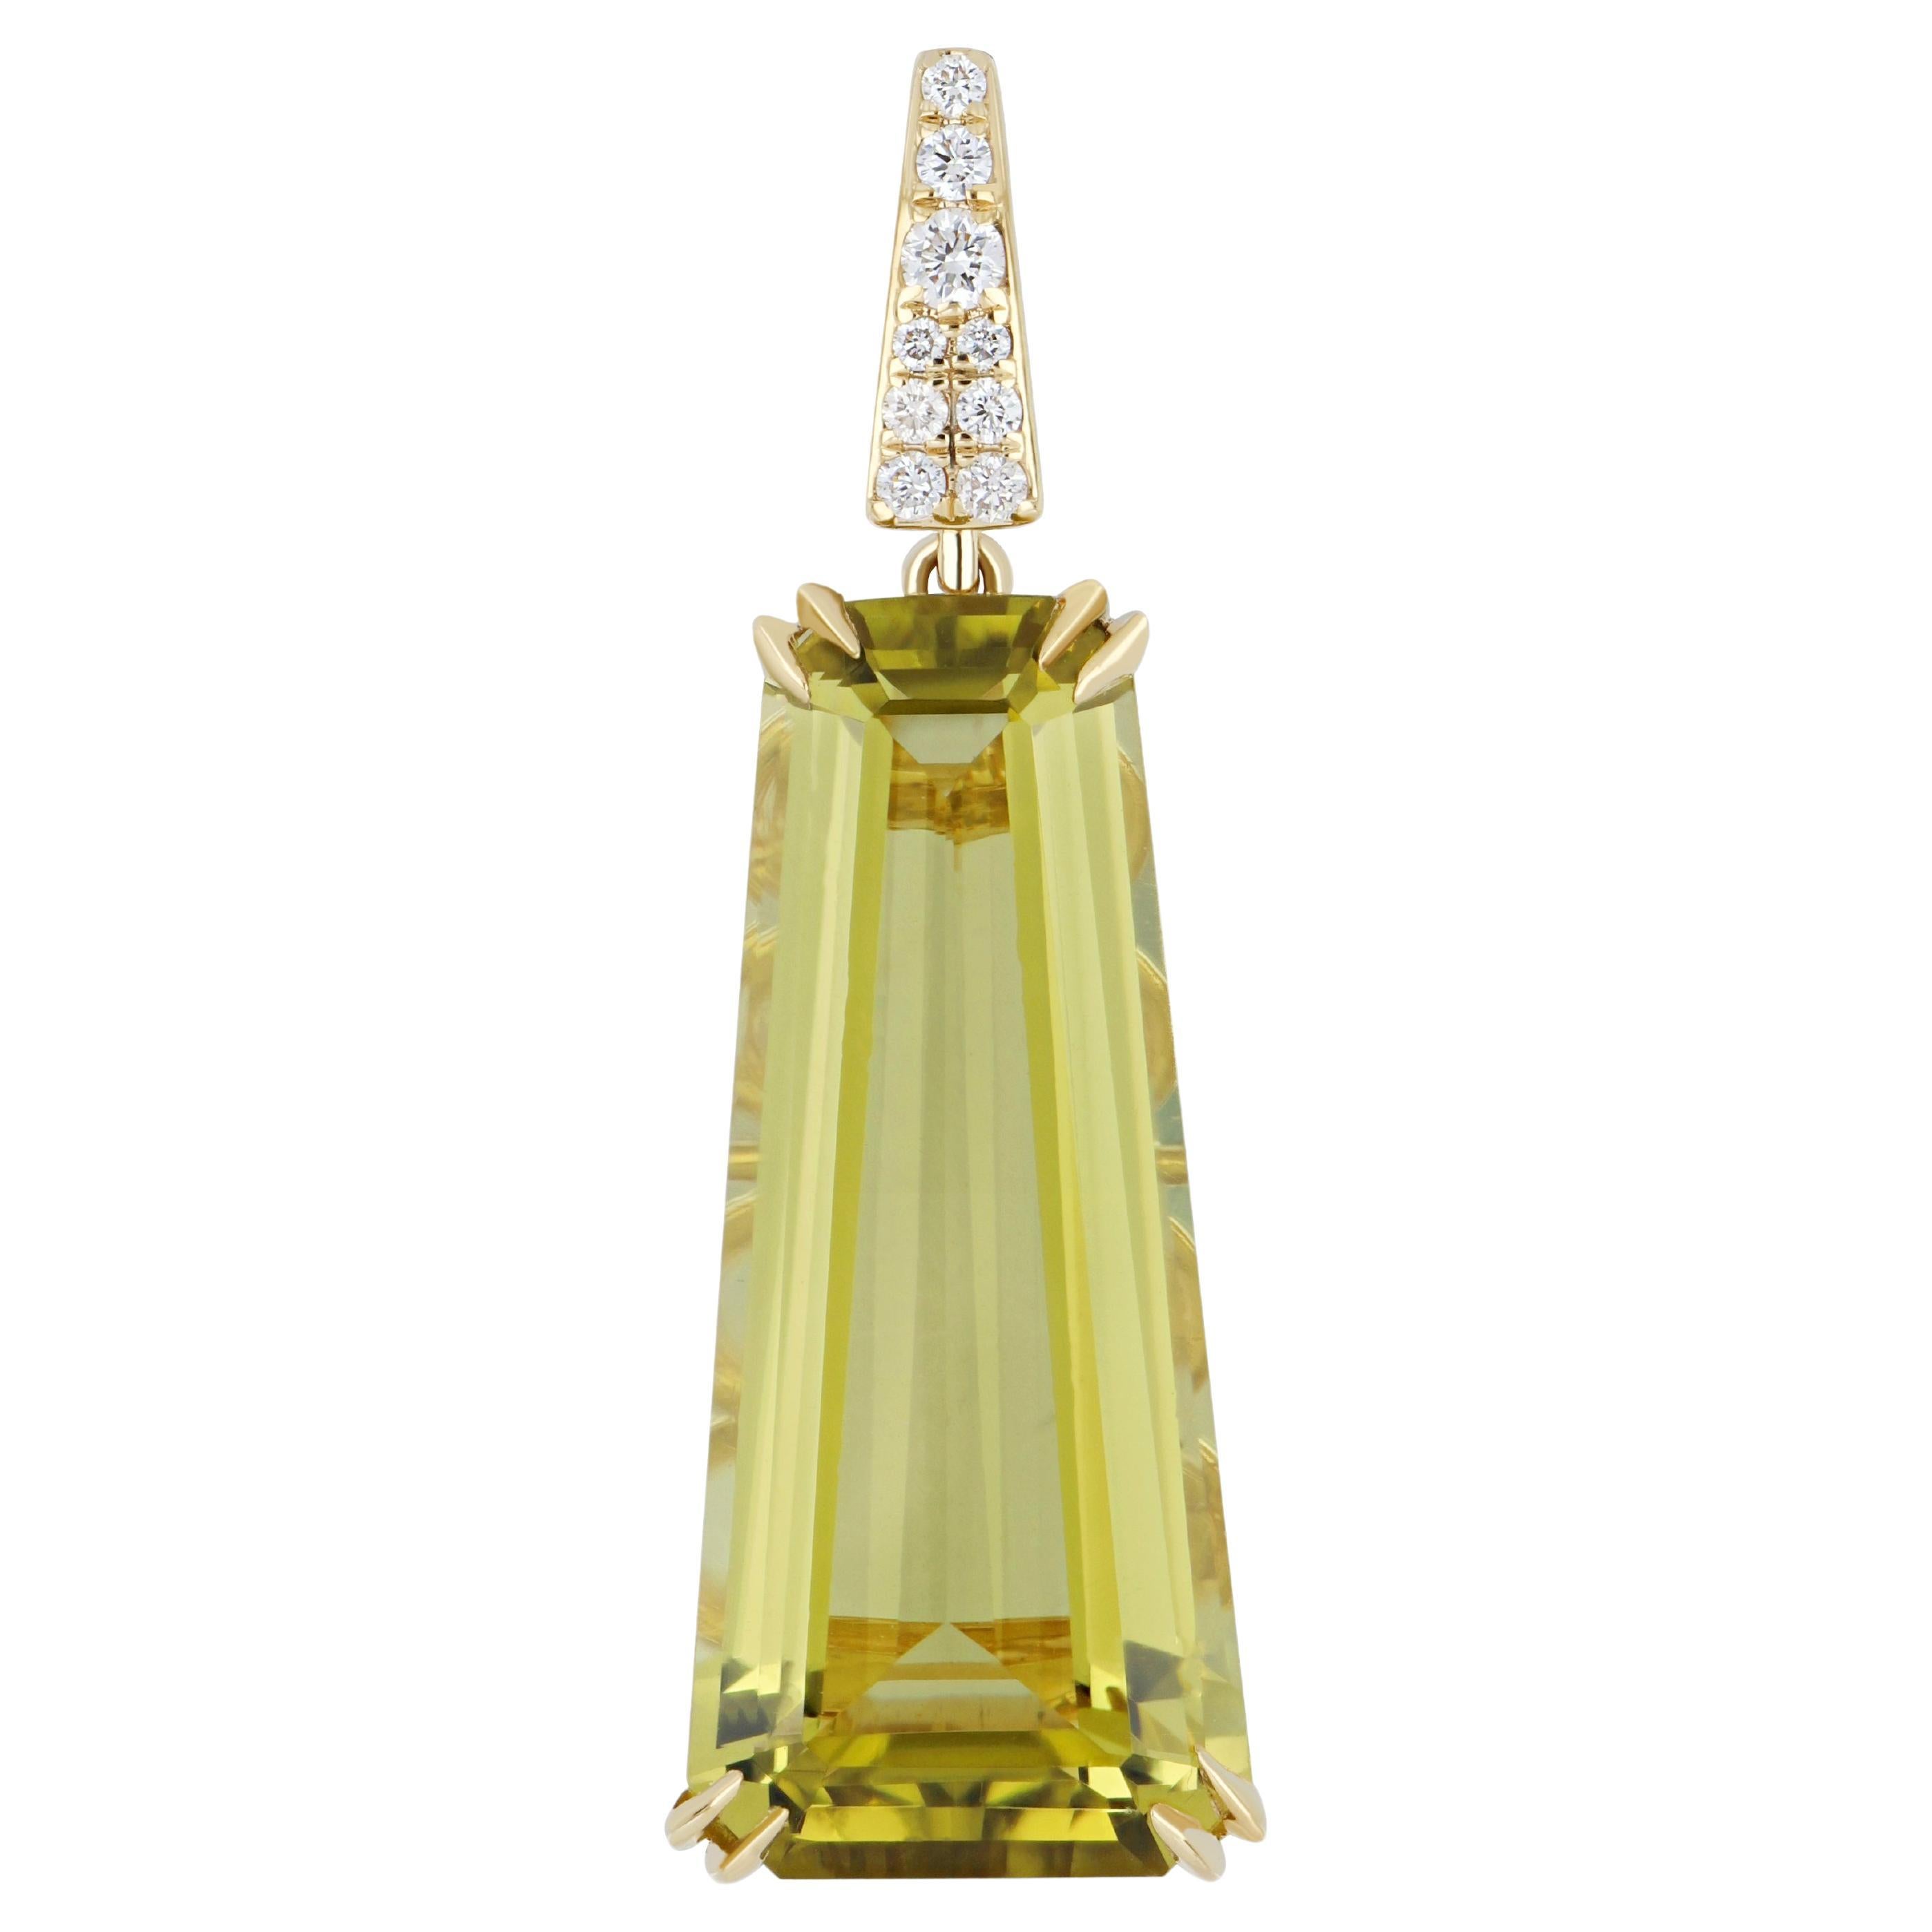 Exquisite 8.8 cts Lemon Quartz & Diamond Pendant, Handcrafted in 18K Gold For Sale